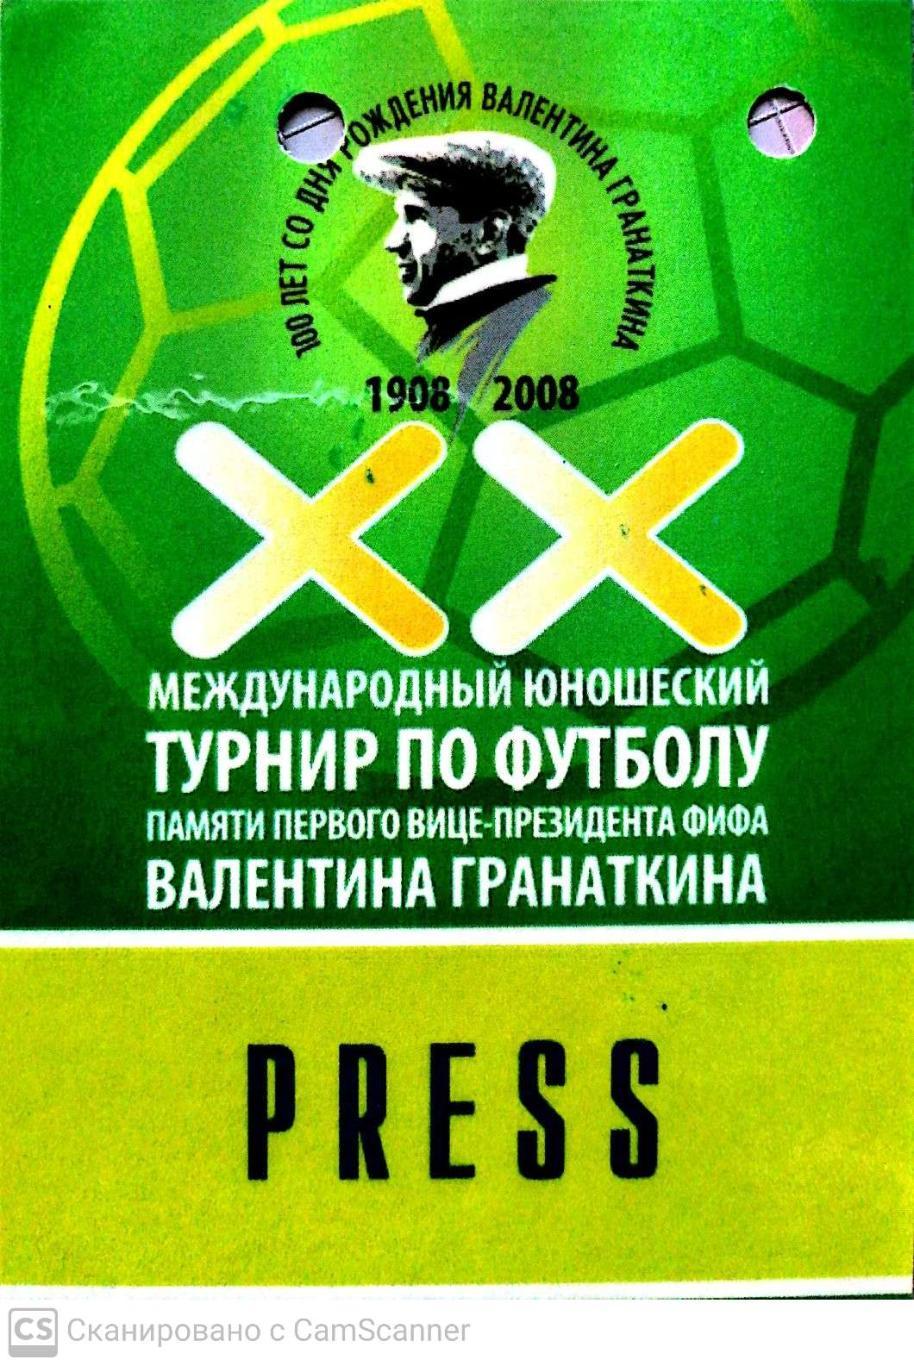 Билет (аккредитация/пресса). Мемориал Гранаткина - 2008. Санкт-Петербург